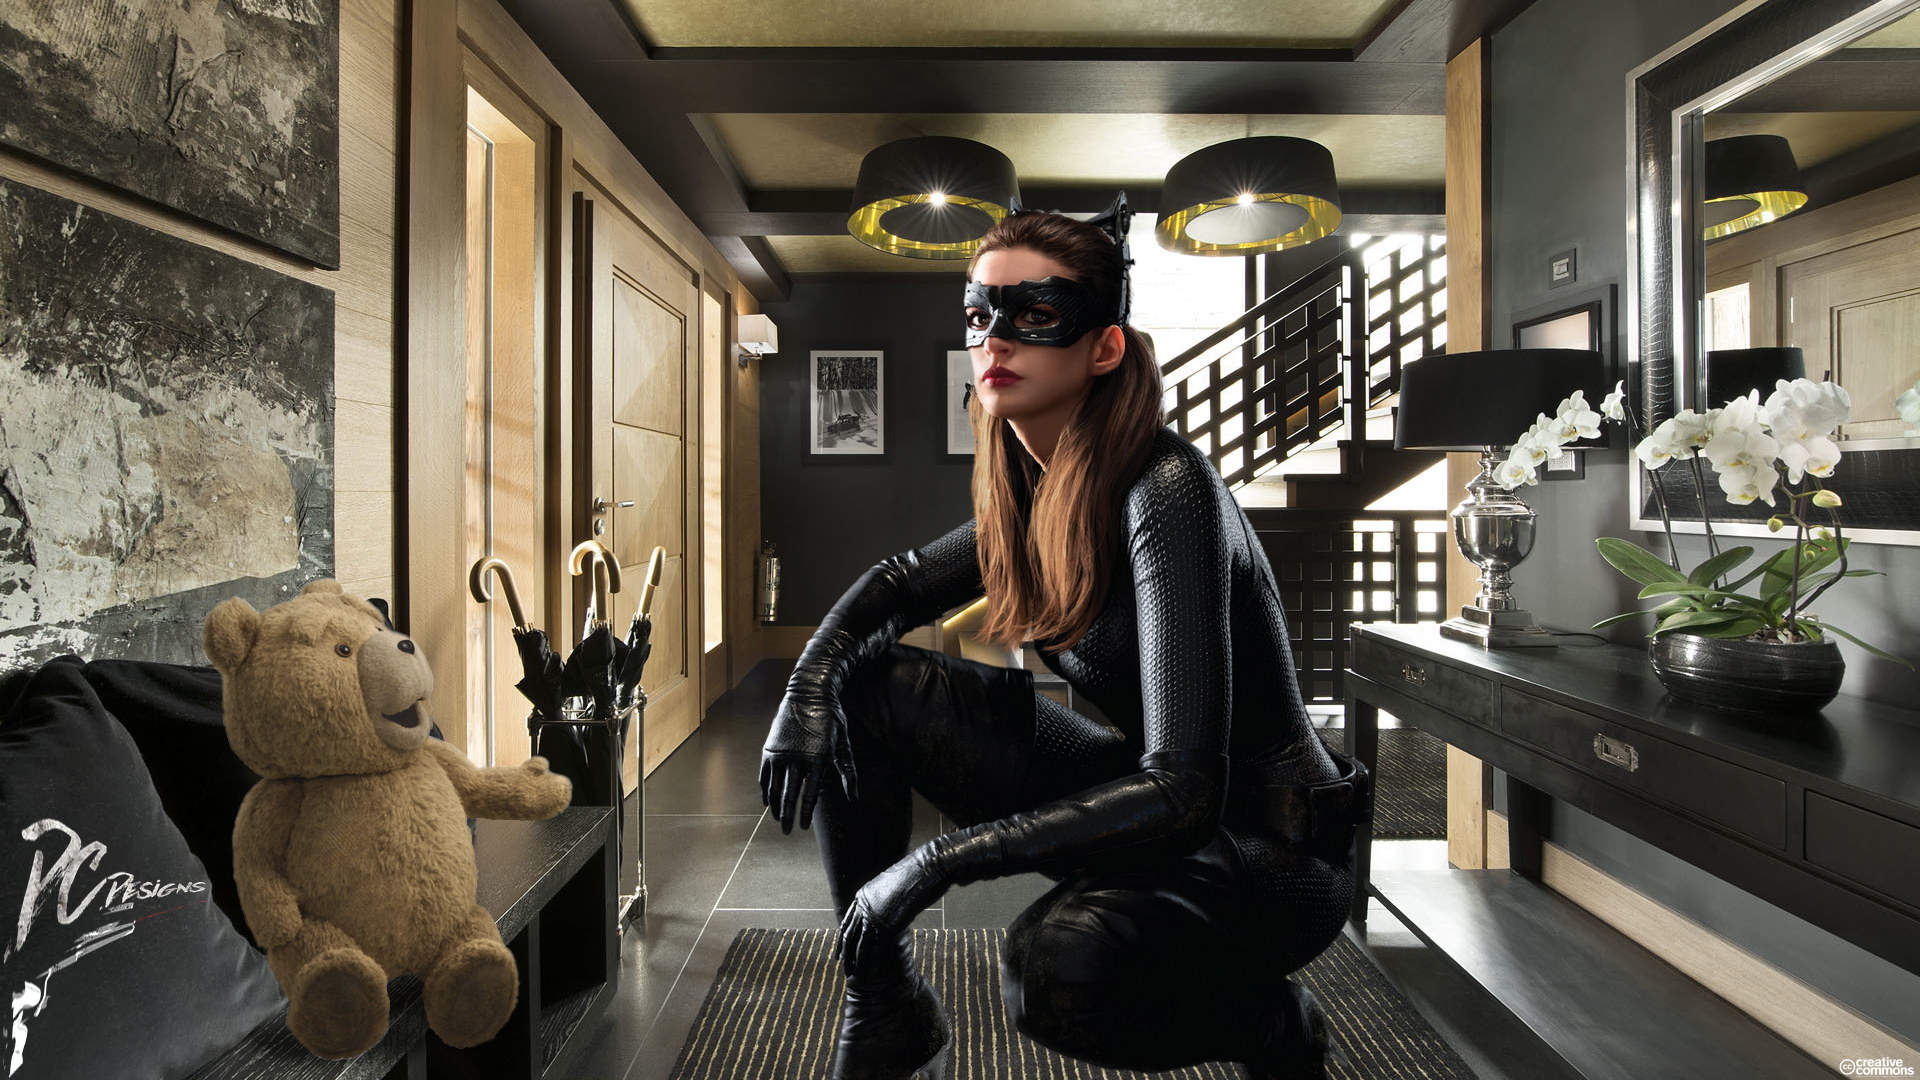 Catwoman Anne Hathaway The Dark Knight Rises Crossover Fan Art Digital Art Manipulation Ted Movie Ch 1920x1080